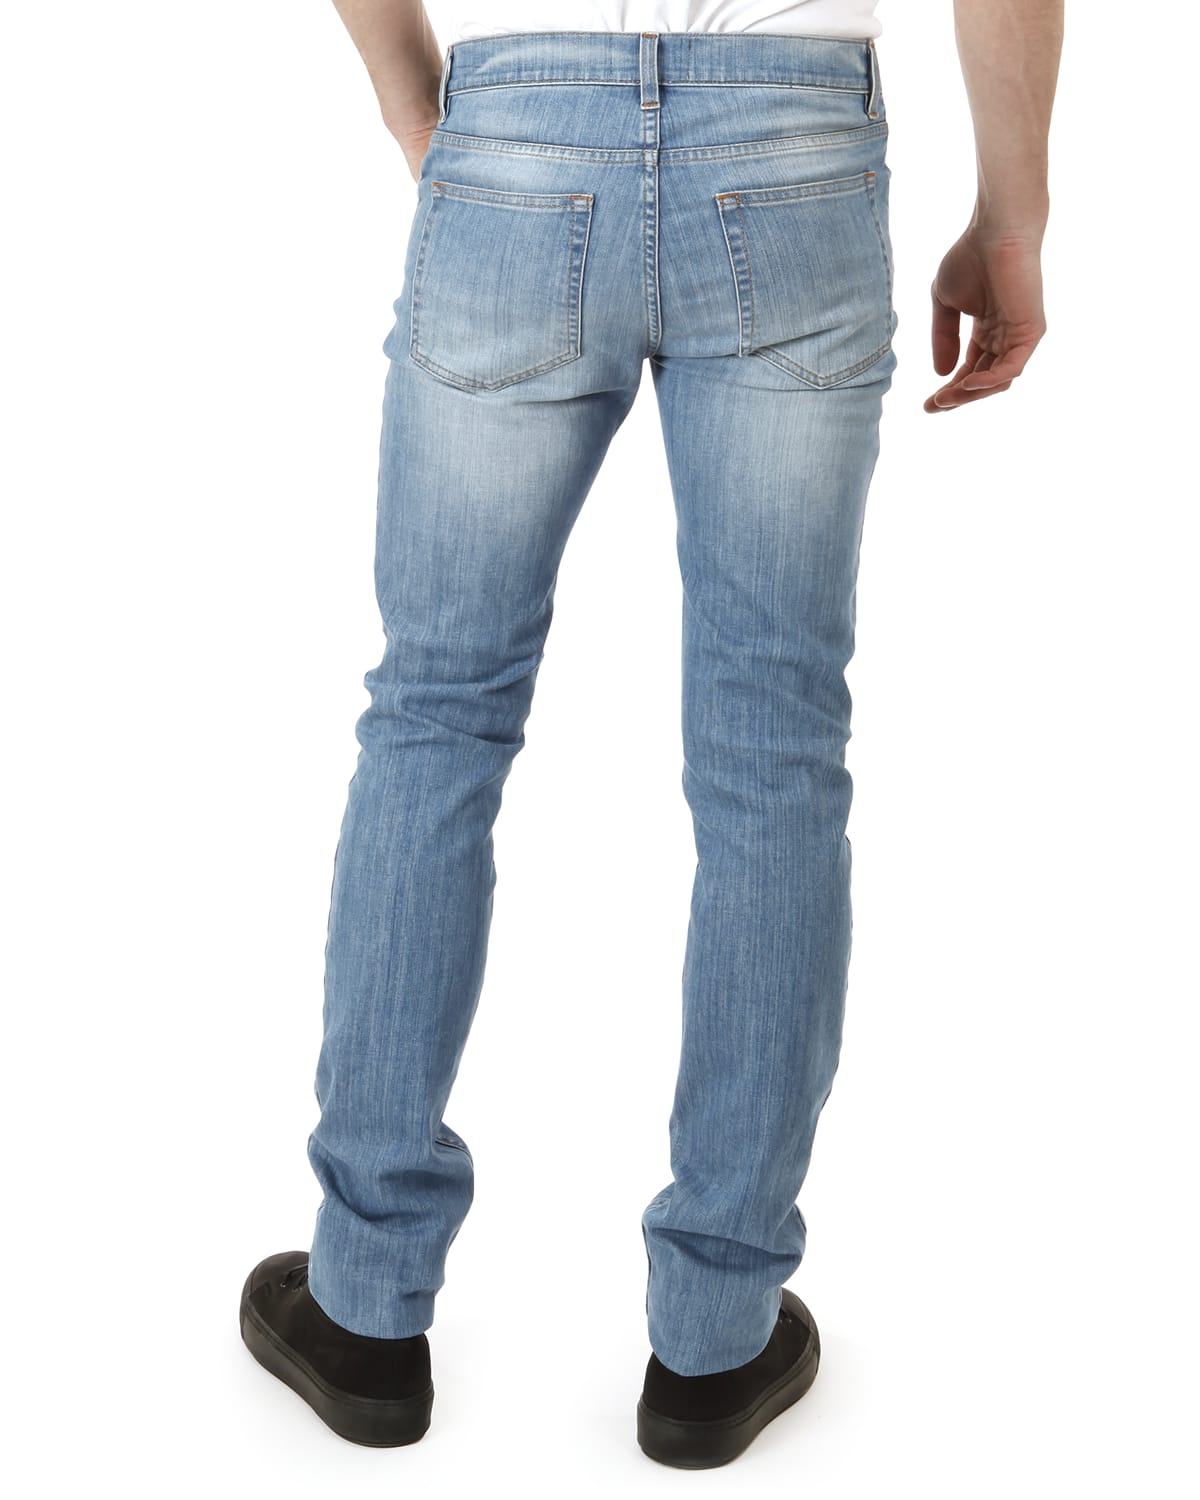 Acne Studios Ace Slim-Fit Denim Jeans, White